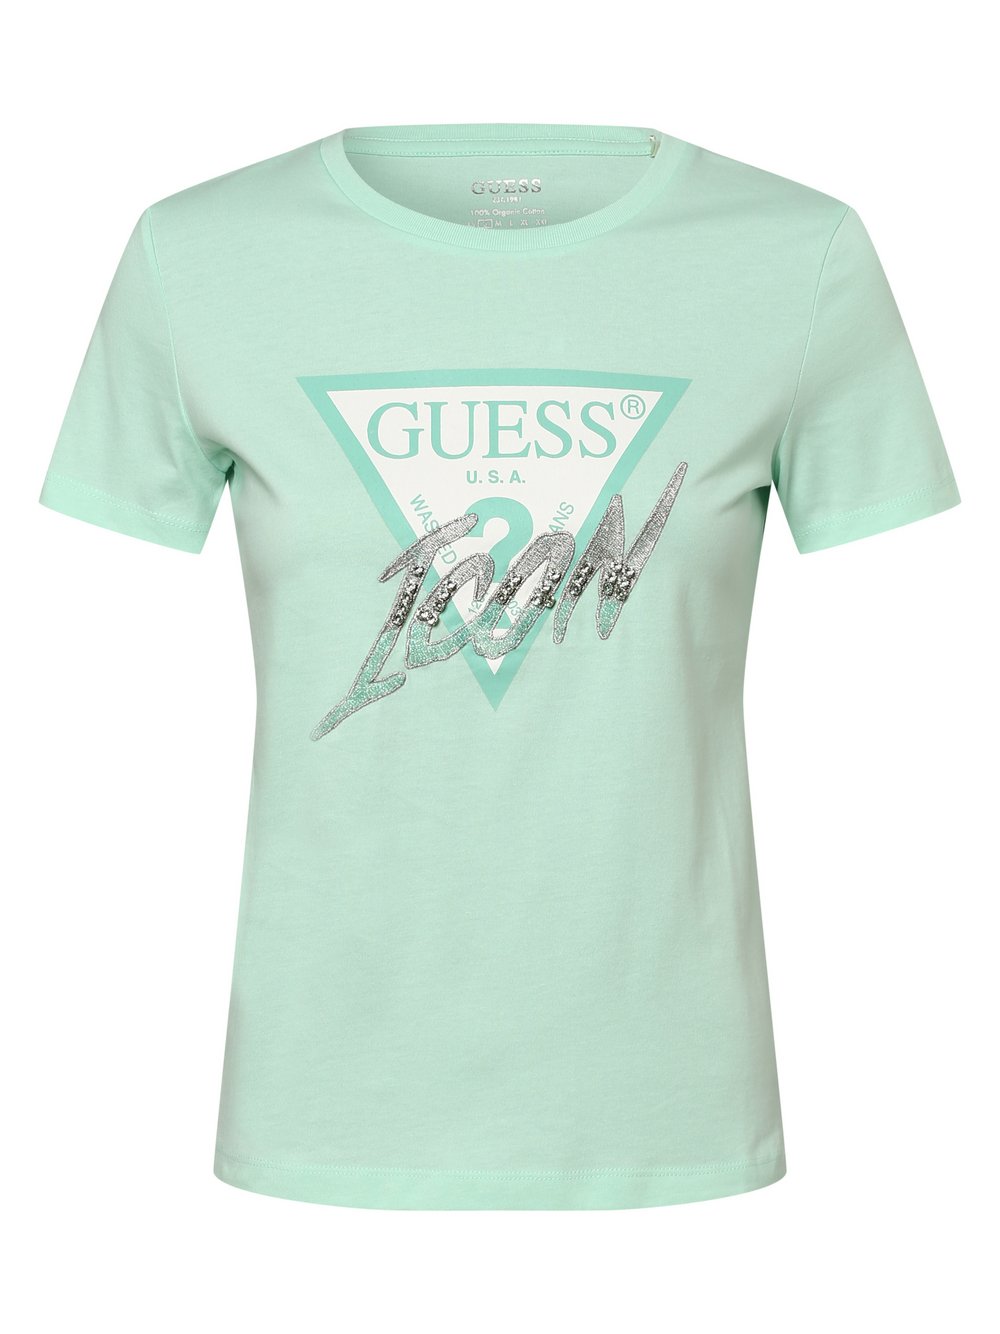 GUESS - T-shirt damski, zielony